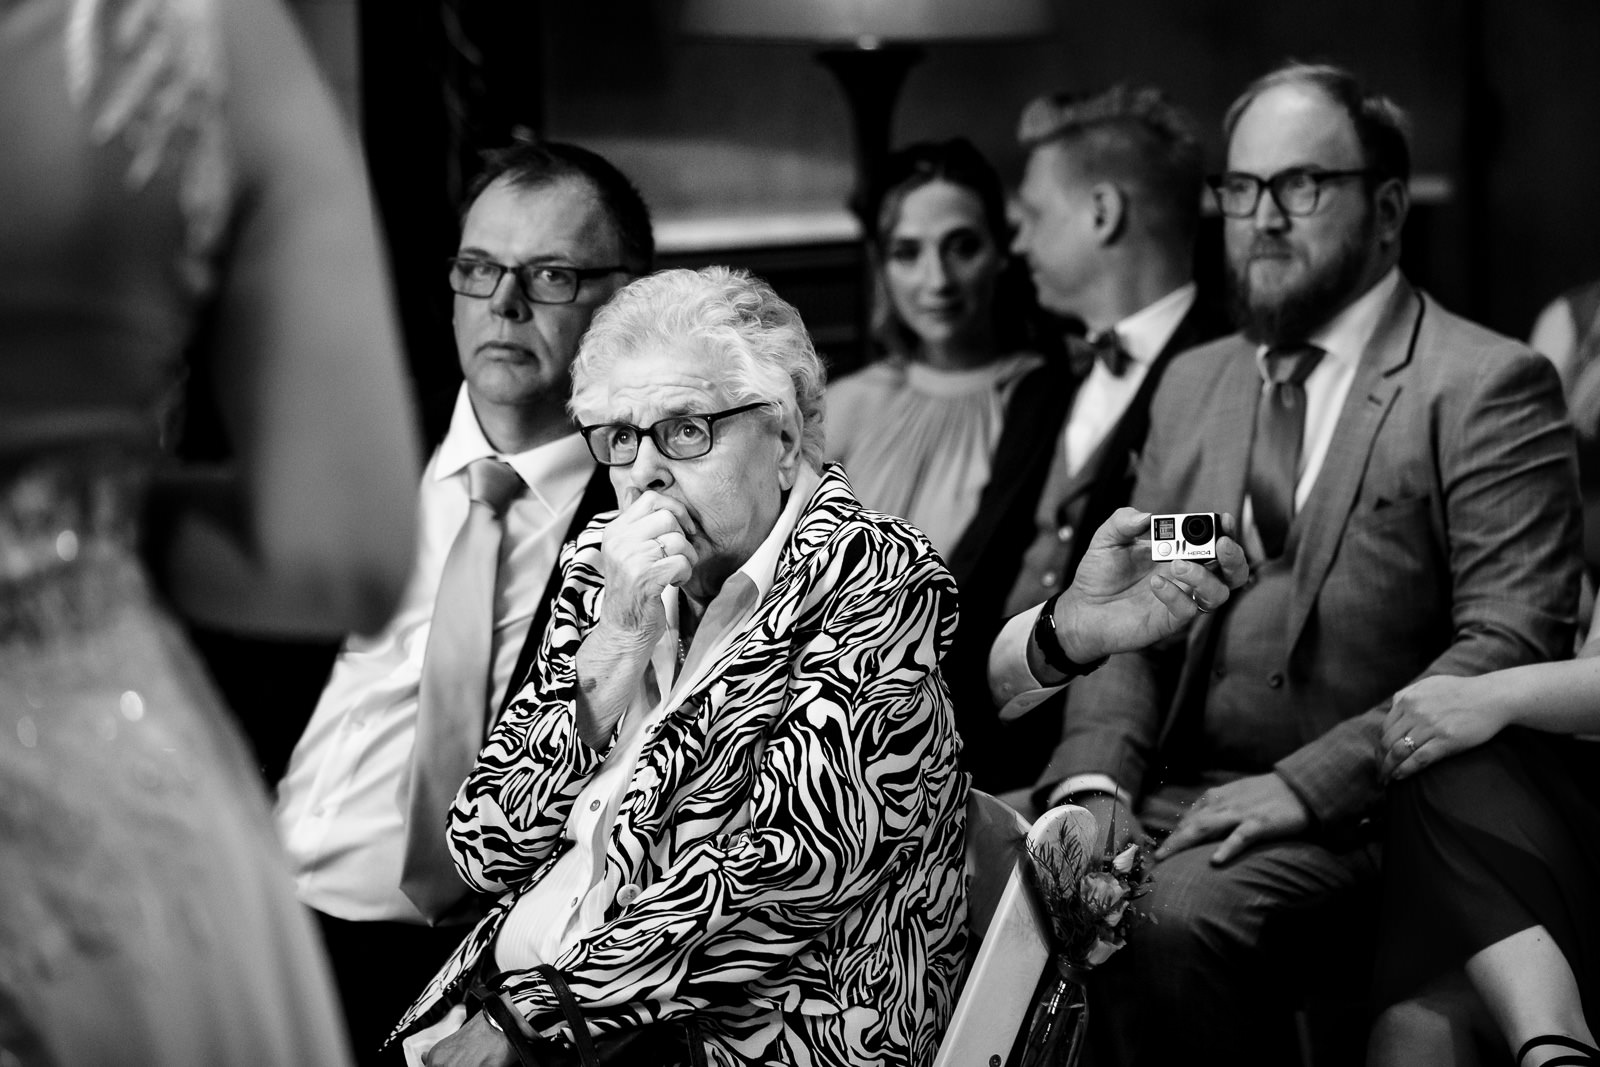 grandma at wedding ceremony by wedding photographer The Hague